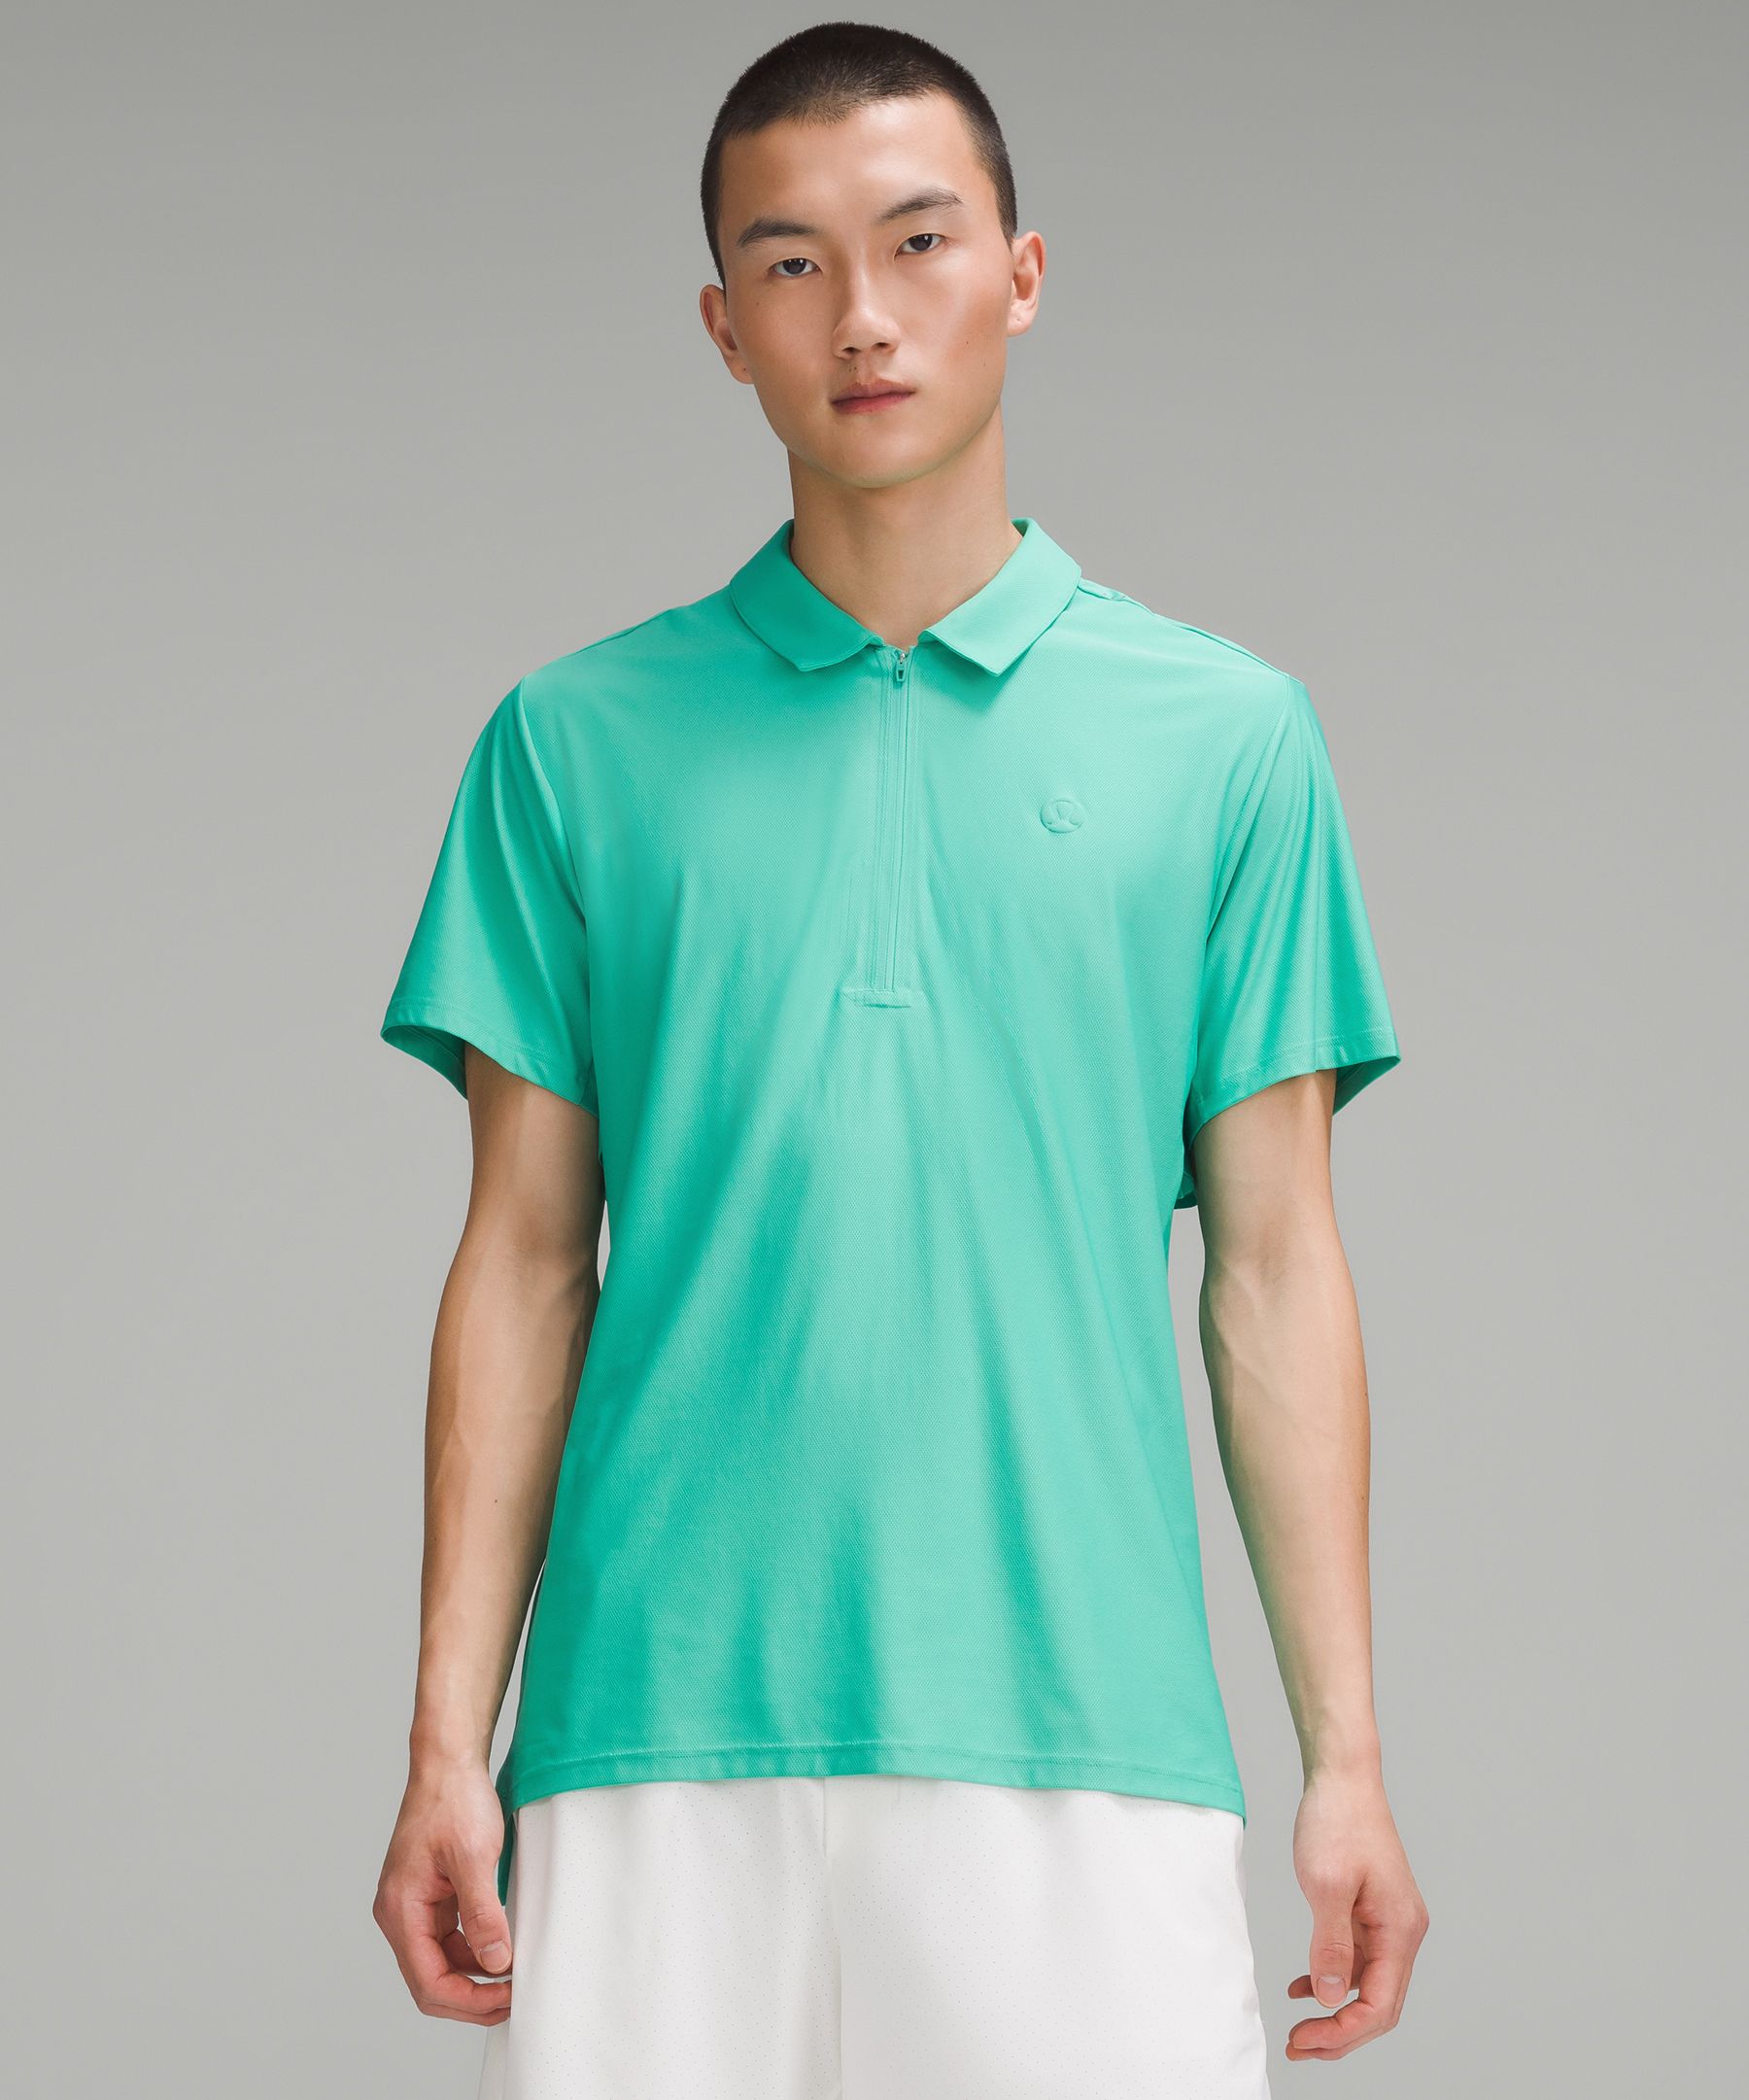 Ventilated Tennis Polo Shirt | Men's Short Sleeve Shirts & Tee's ...